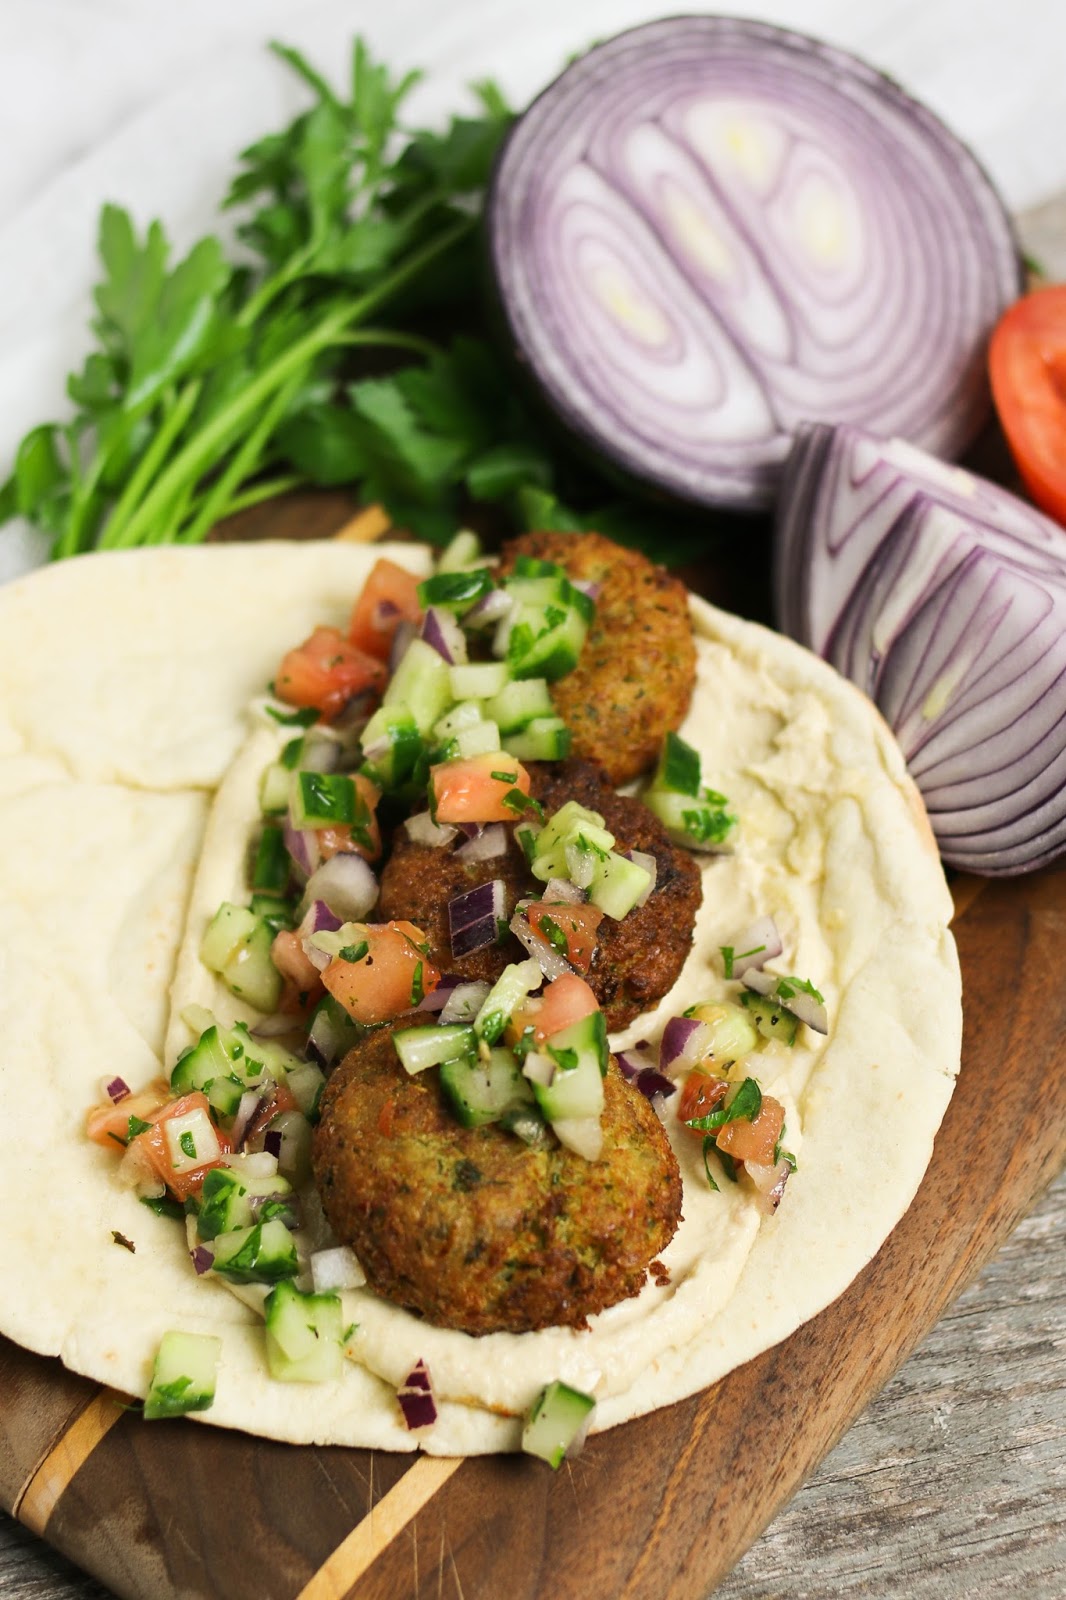 Ginger Rose: Recreating Israeli-Style Falafel & Hummus At Home